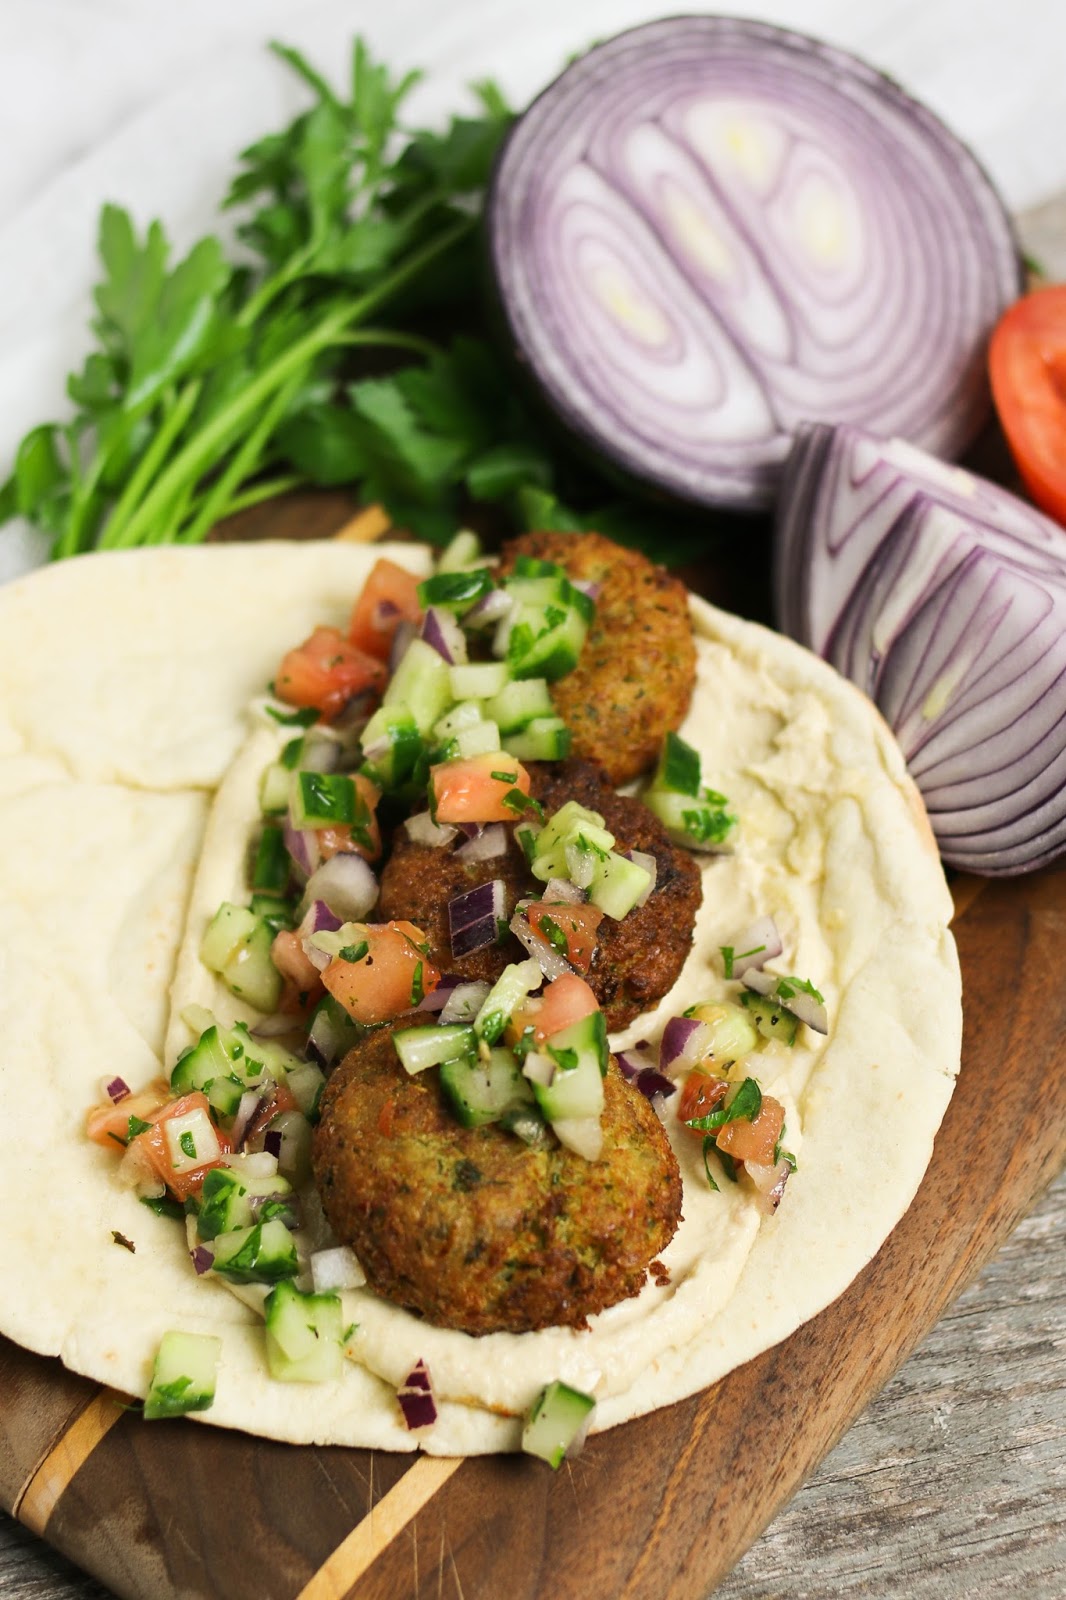 Ginger Rose: Recreating Israeli-Style Falafel & Hummus At Home